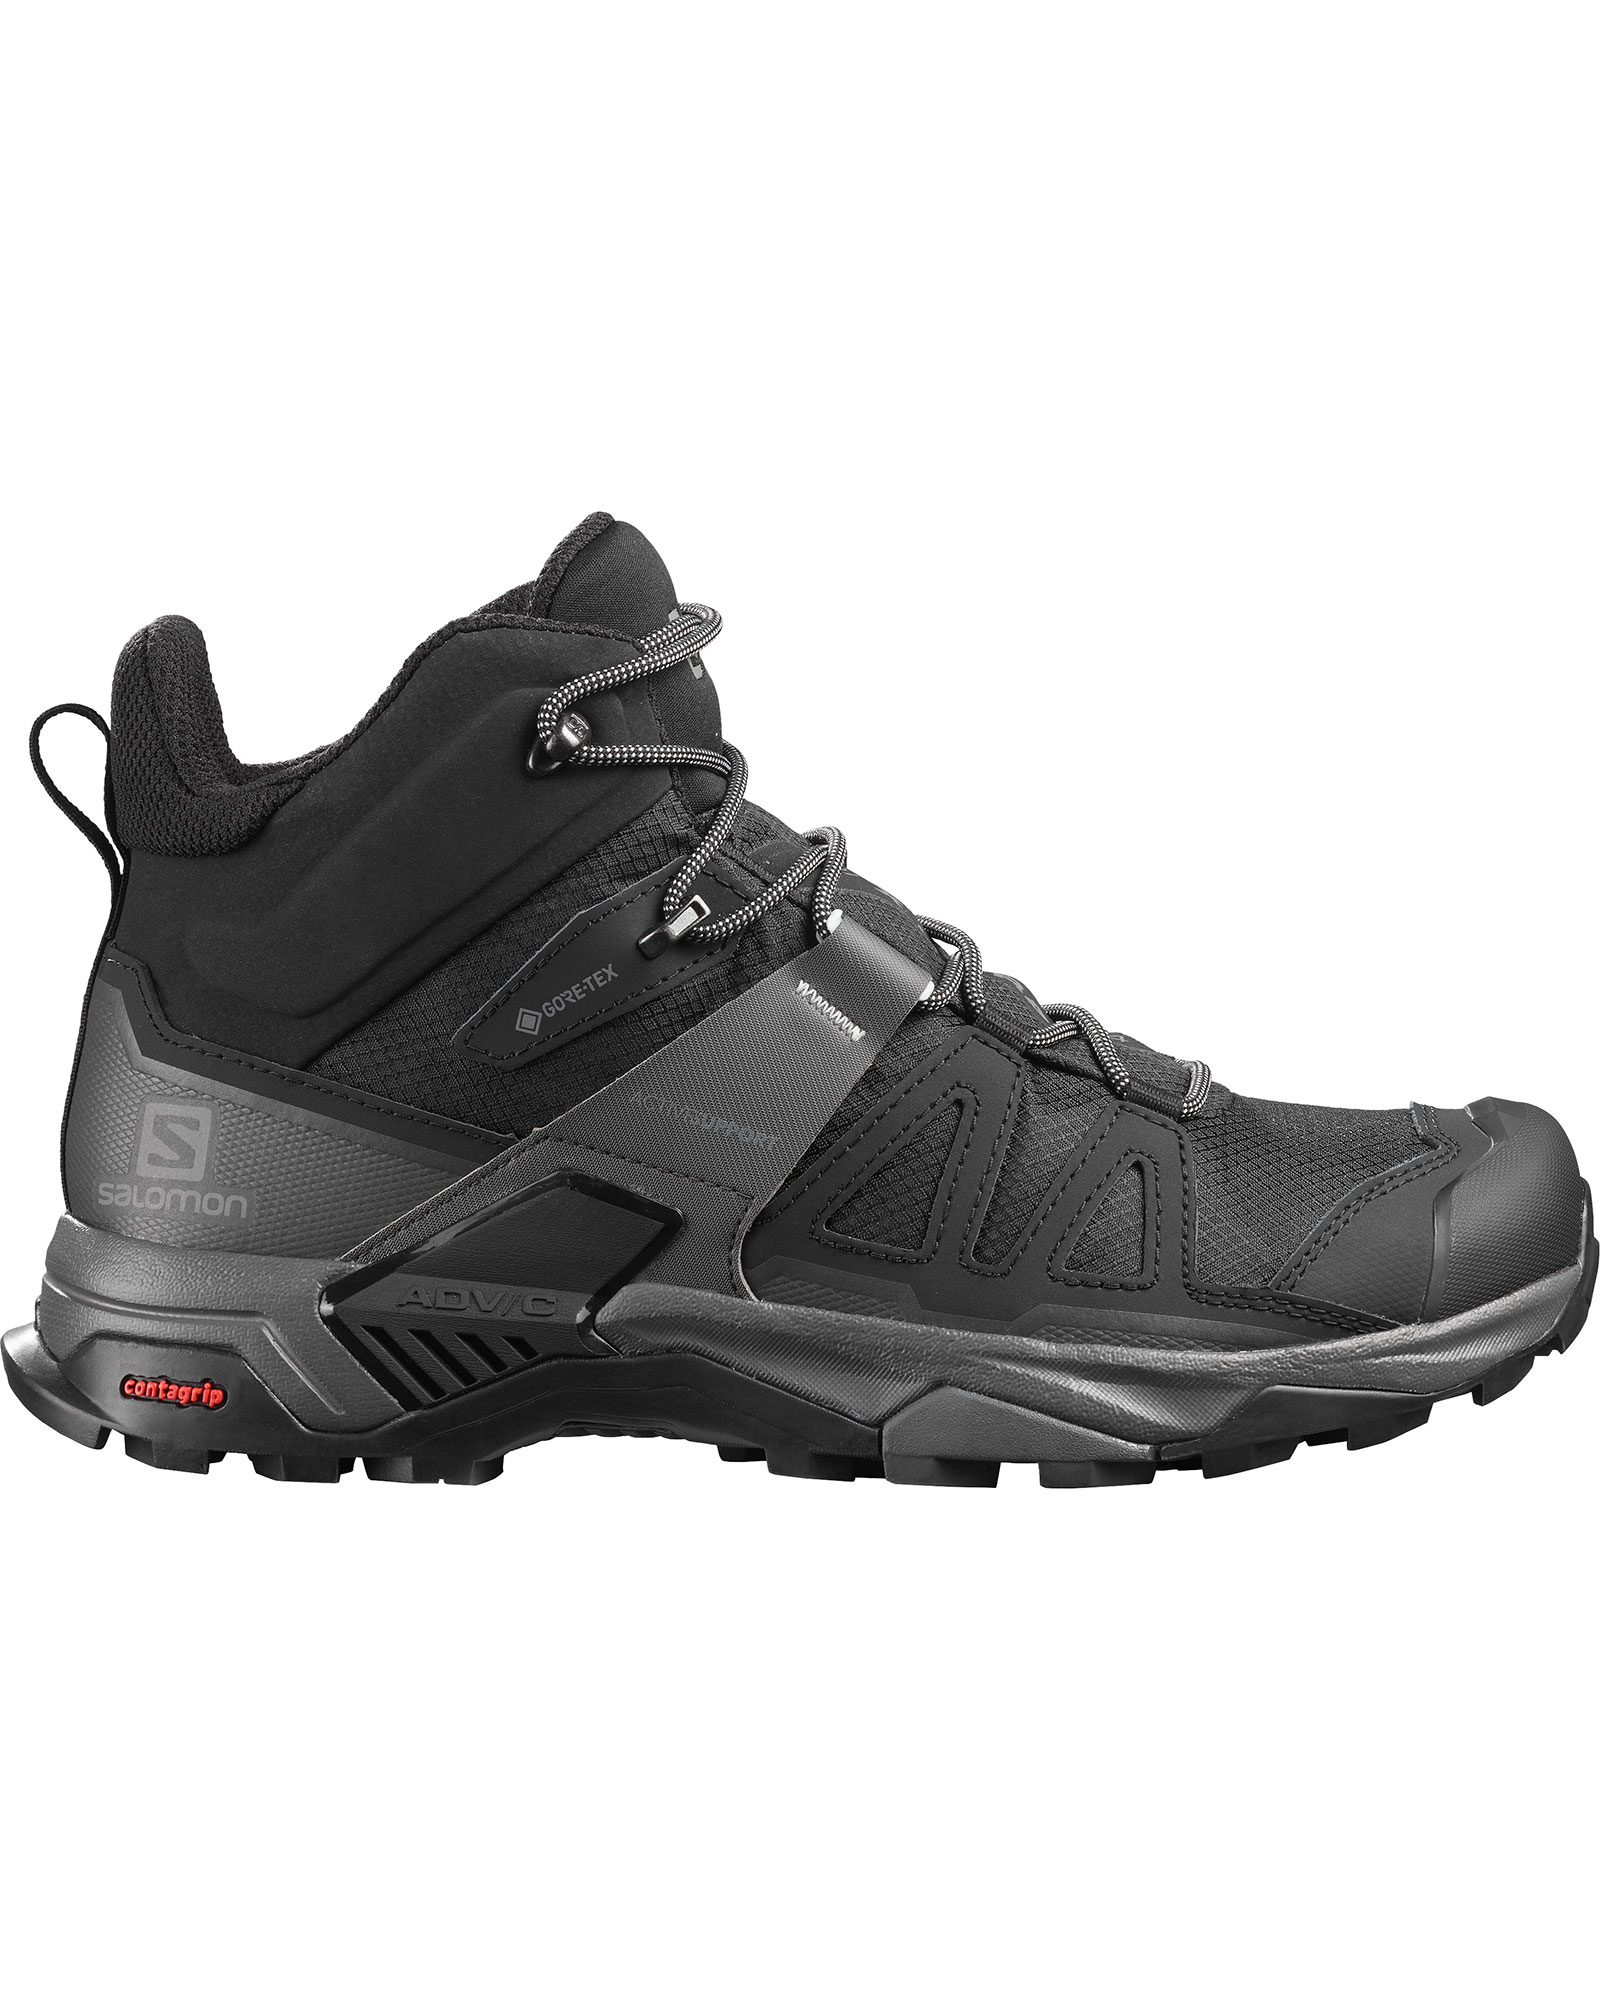 Salomon X Ultra 4 Mid GORE TEX Men’s Boots - Black/Magnet/Pearl Blue UK 11.5